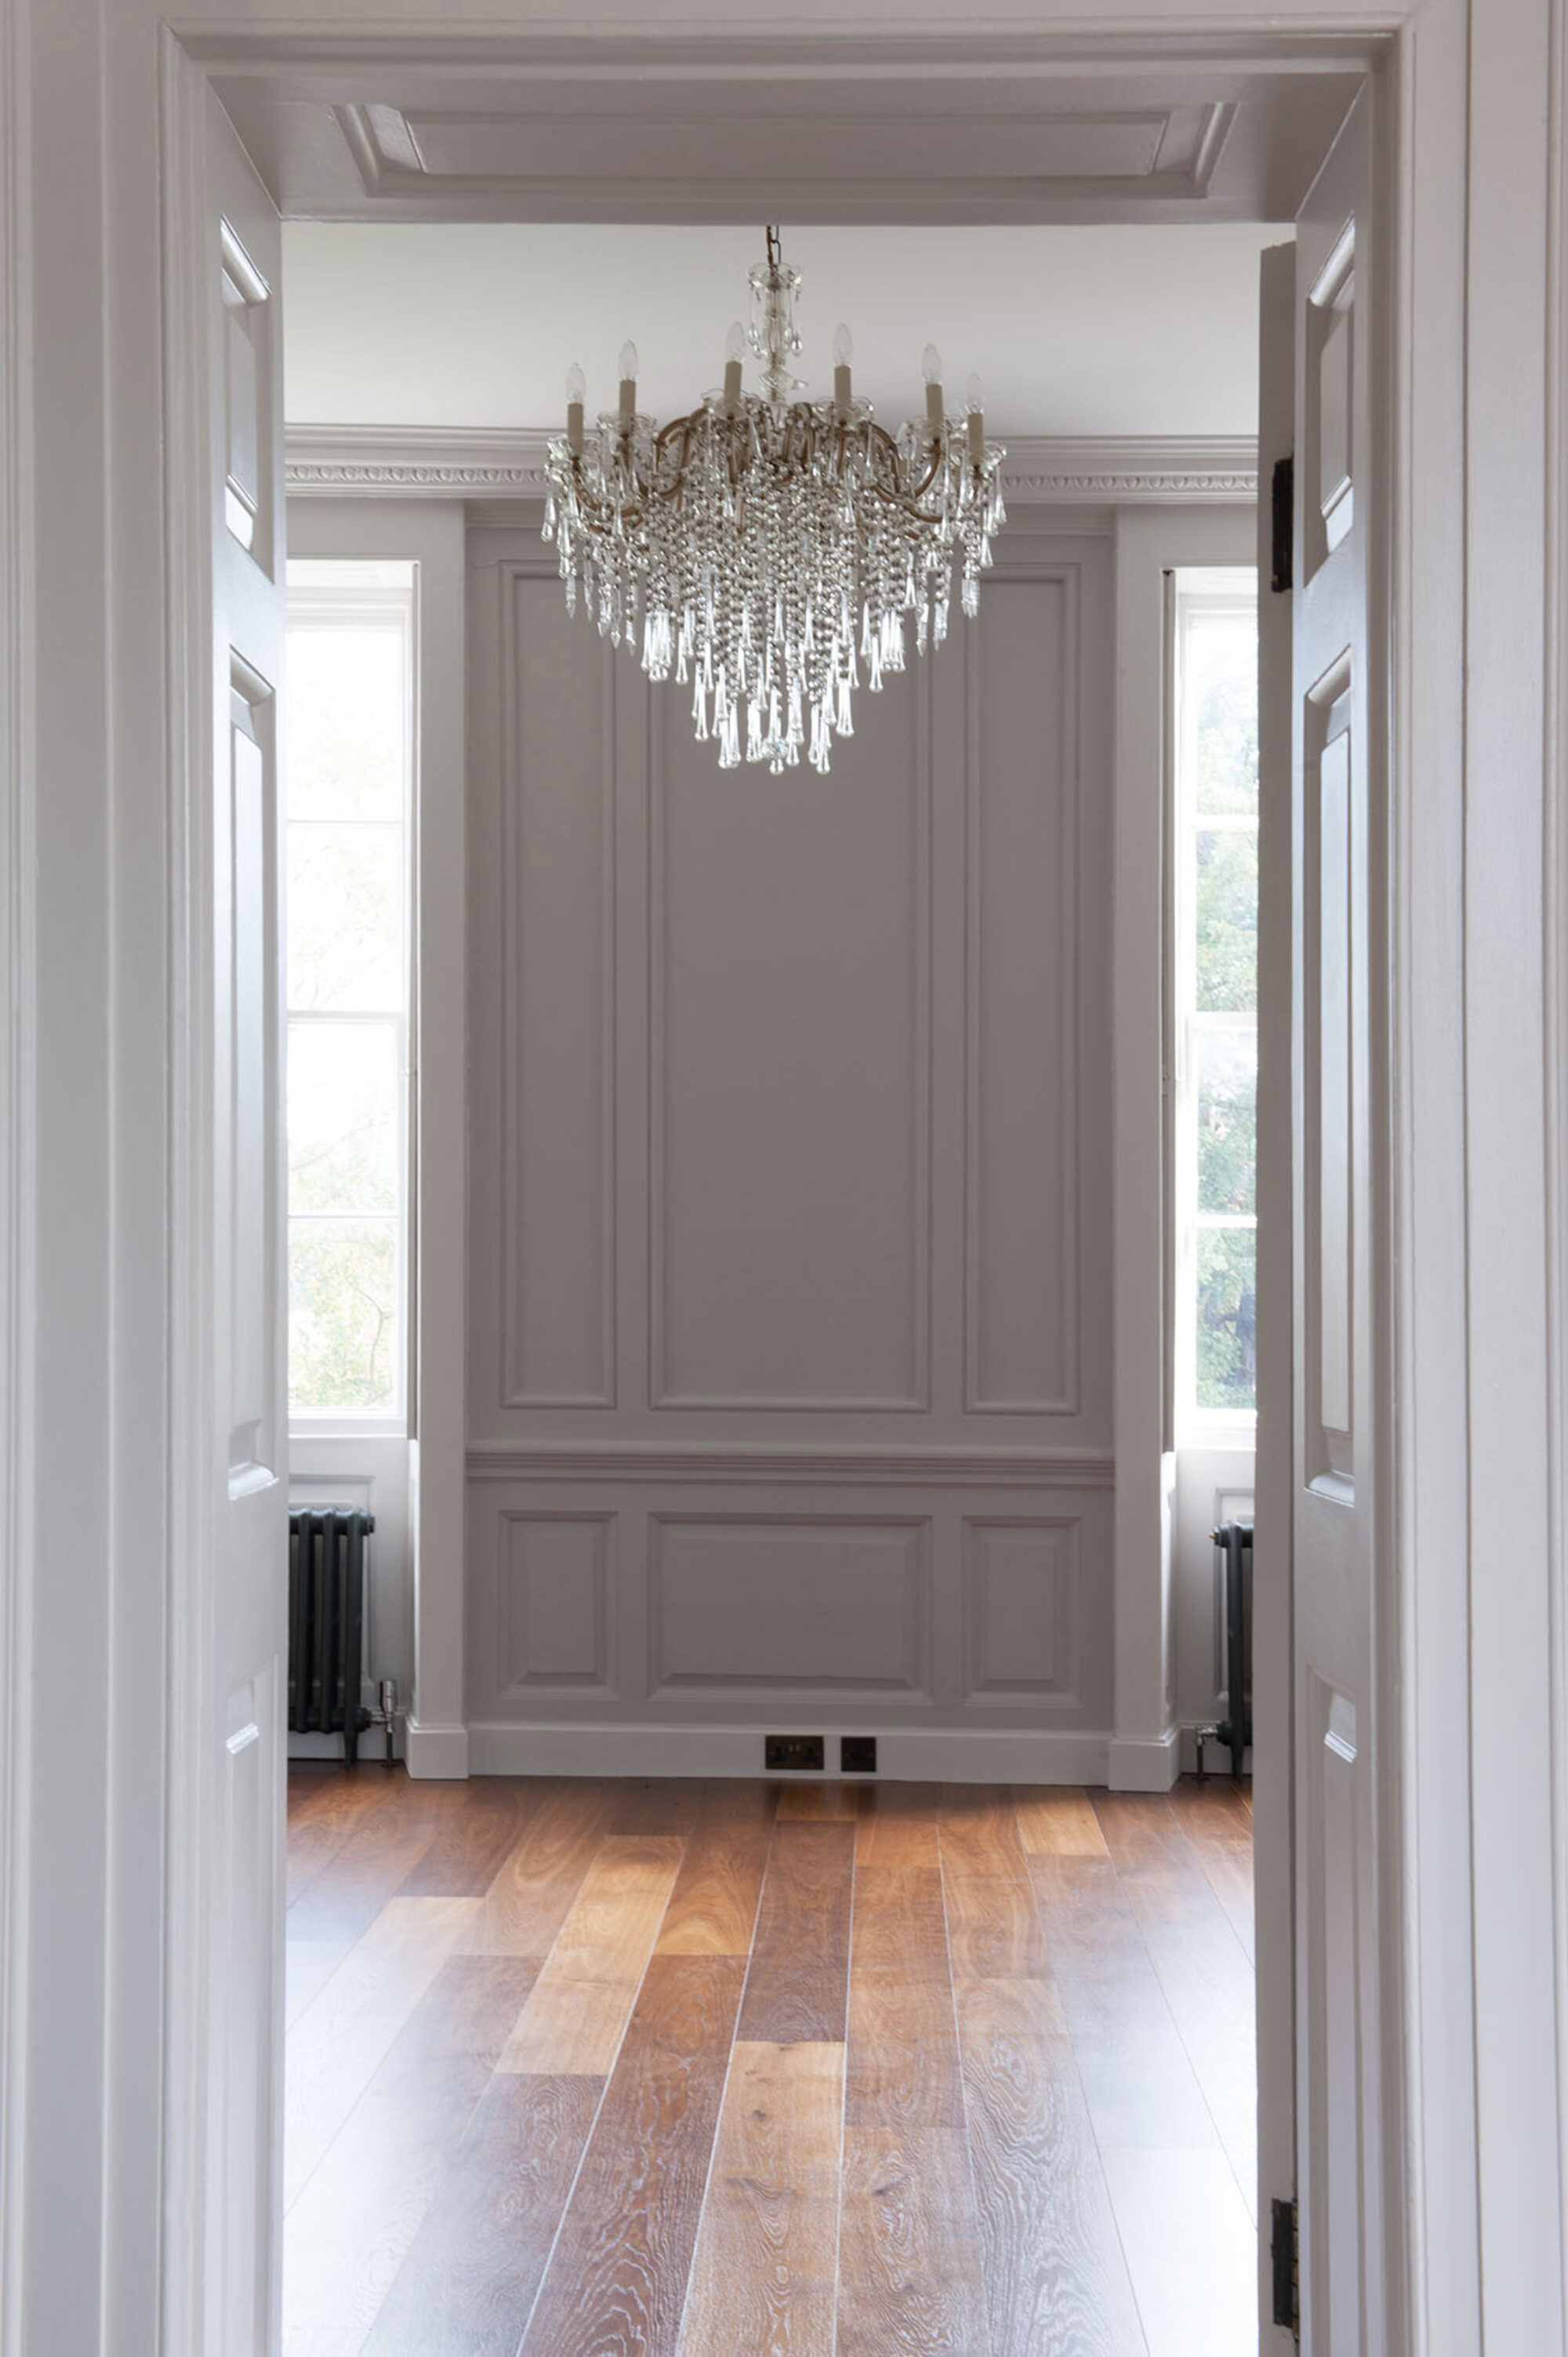 Oak landmark tatton planks through doorway with a crystal chandelier